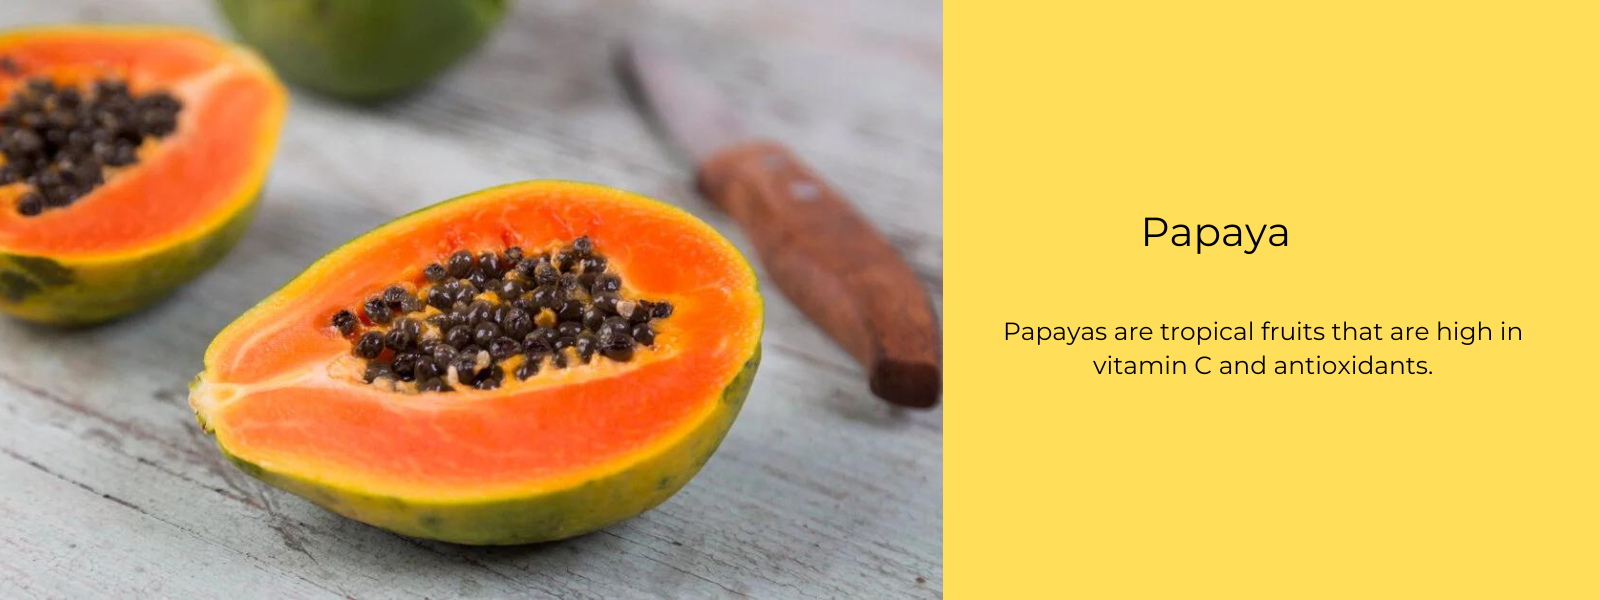 Papaya - Health Benefits, Uses and Important Facts